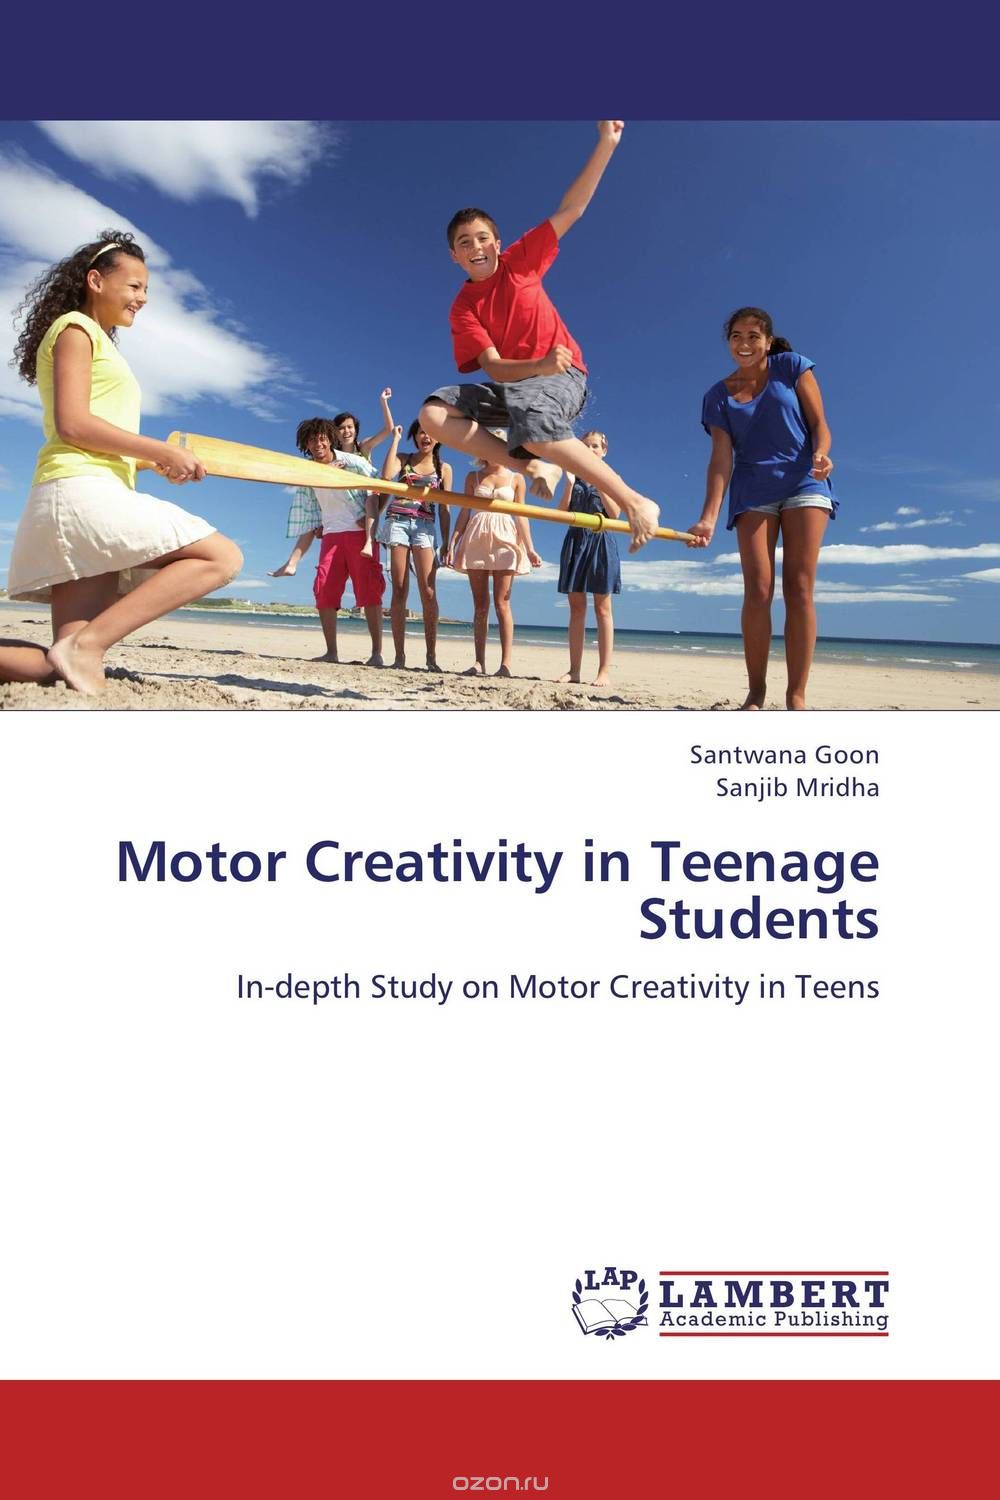 Скачать книгу "Motor Creativity in Teenage Students"